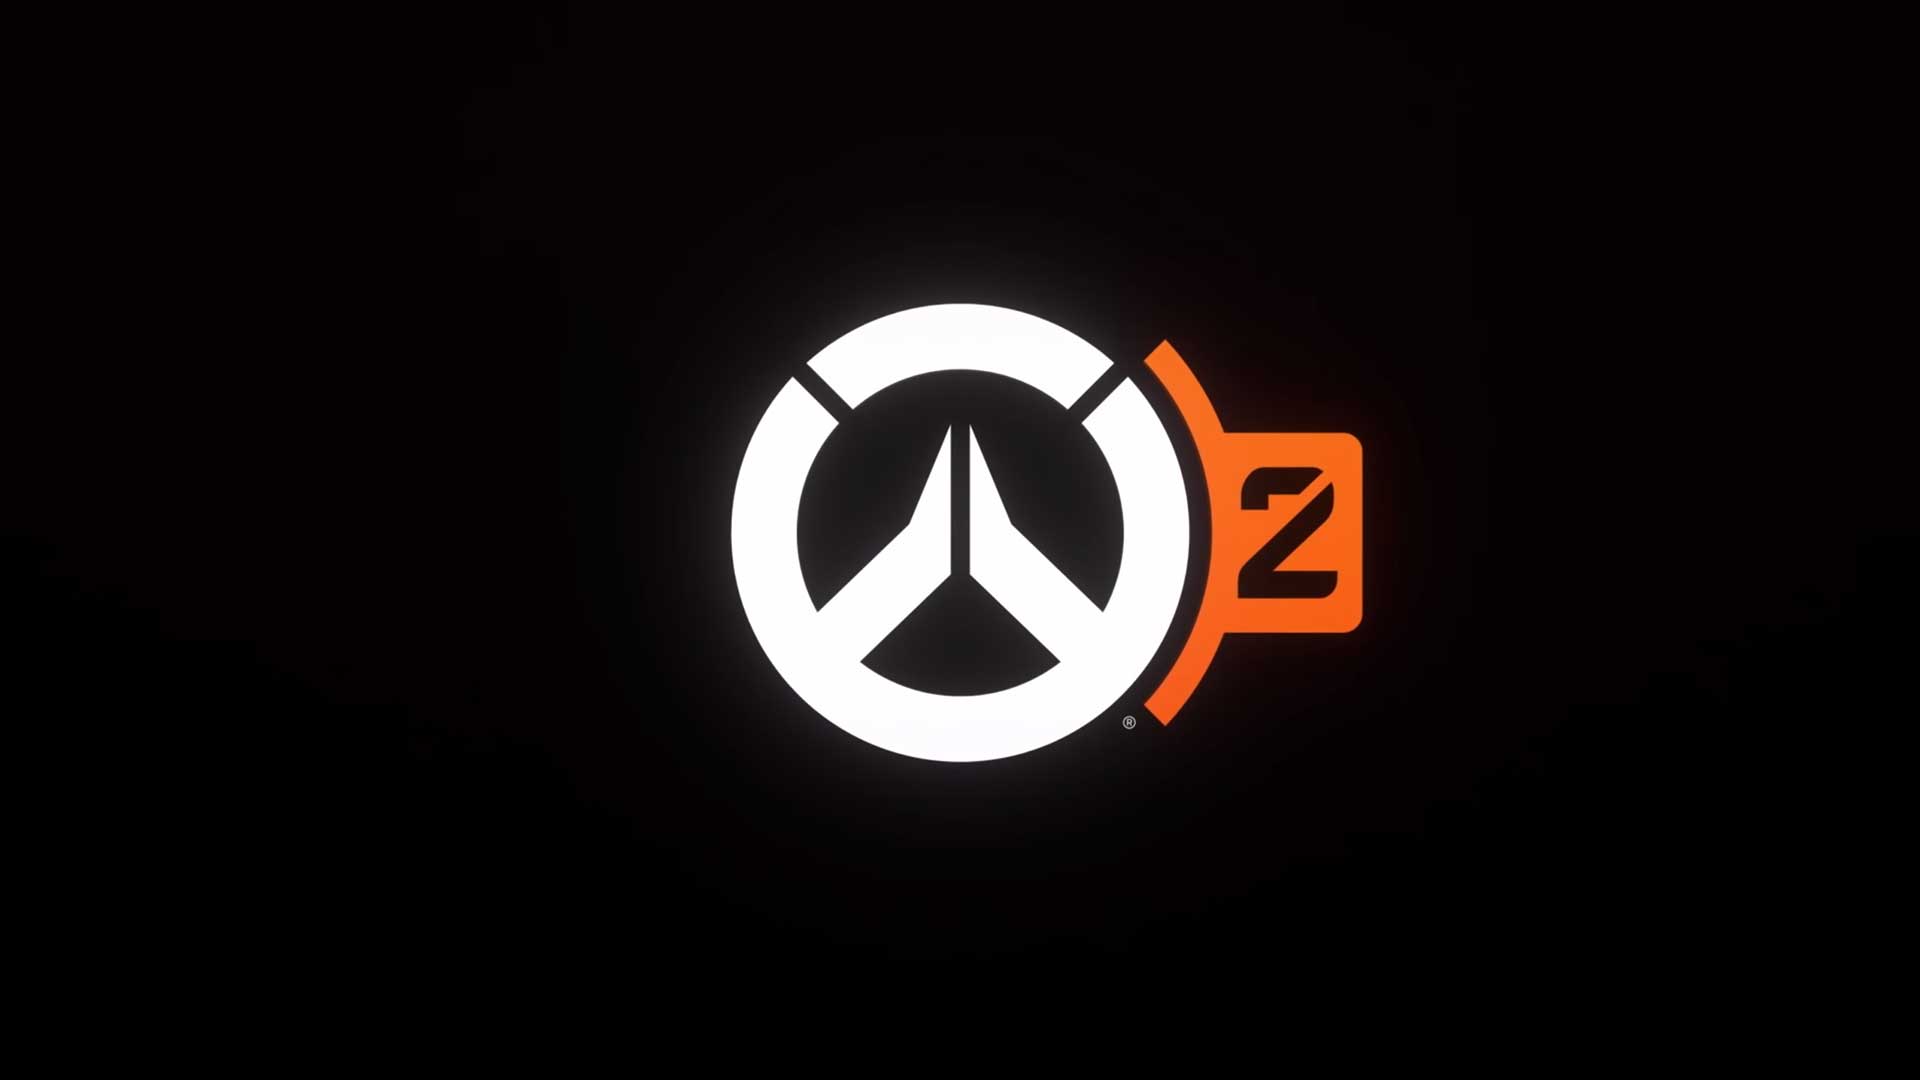 OW2 Logo babt